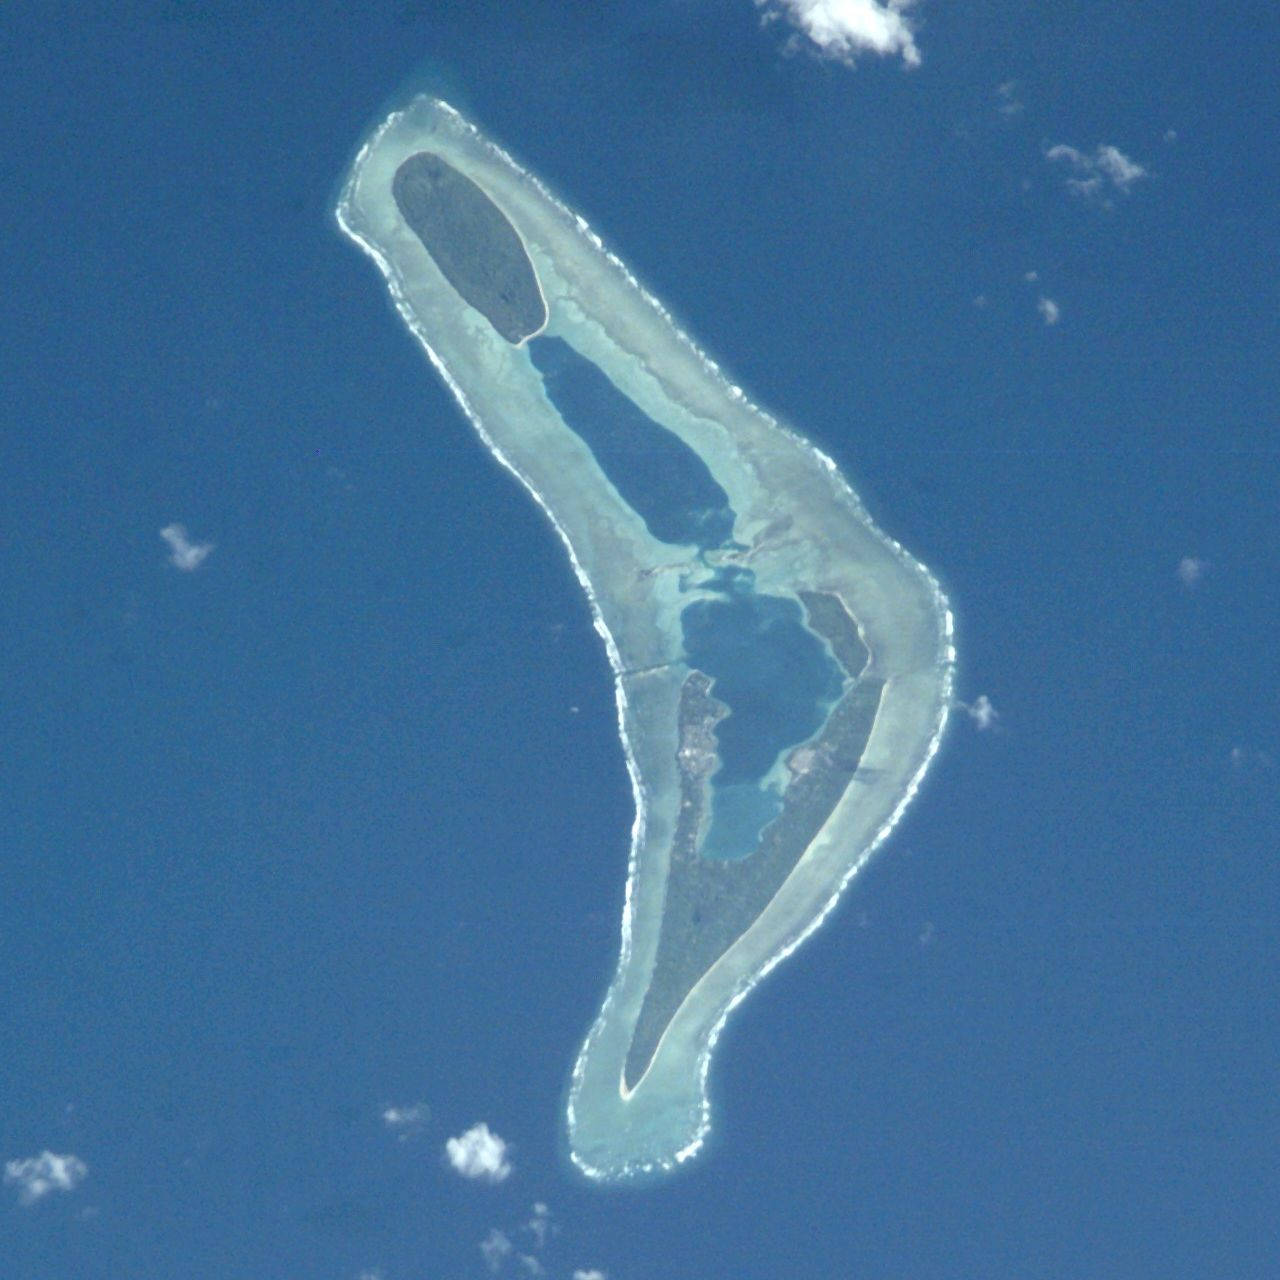 Tuvaluinsel Luftaufnahme Wallpaper